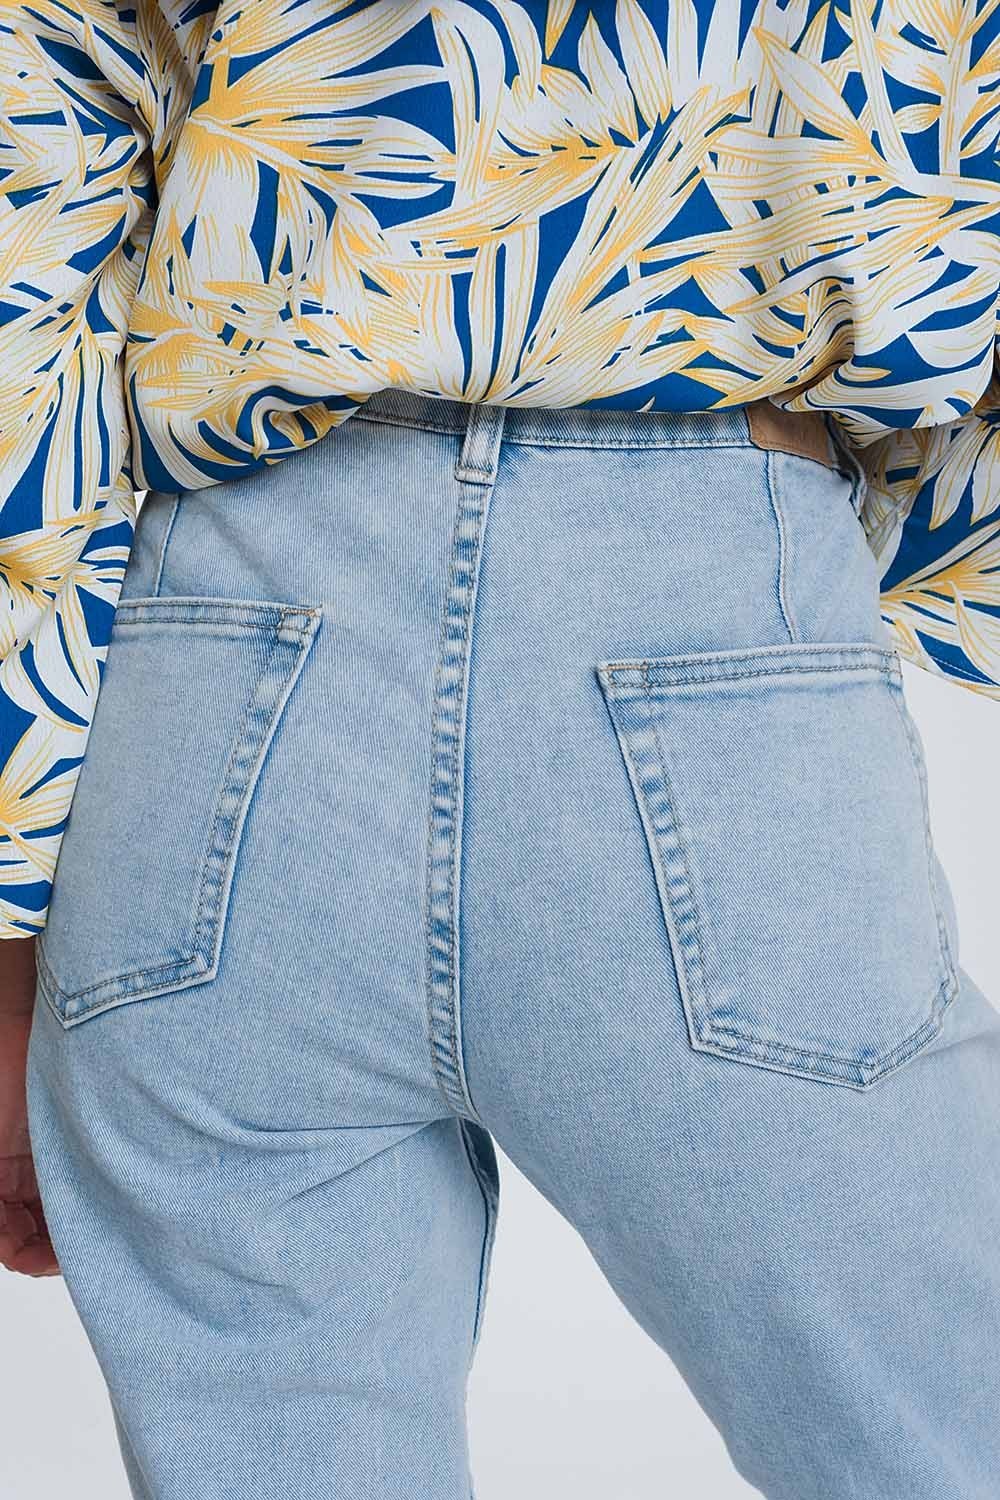 Pocket Detail Jeans in Light Denim